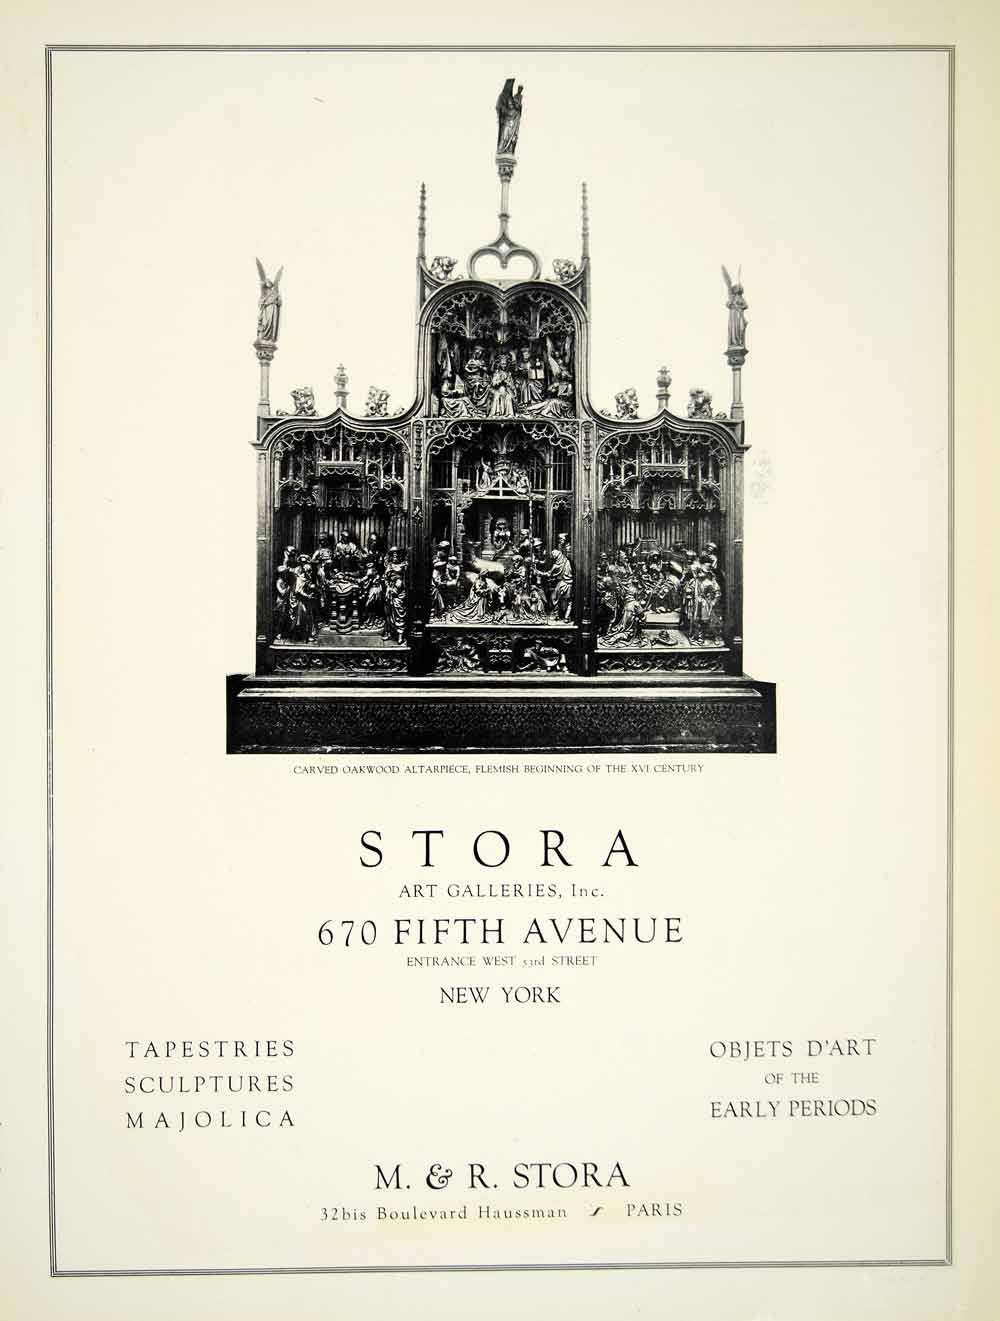 1931 Ad M&R Stora Art Gallery 670 5th Ave 32bis Boulevard Haussman Paris YAN1